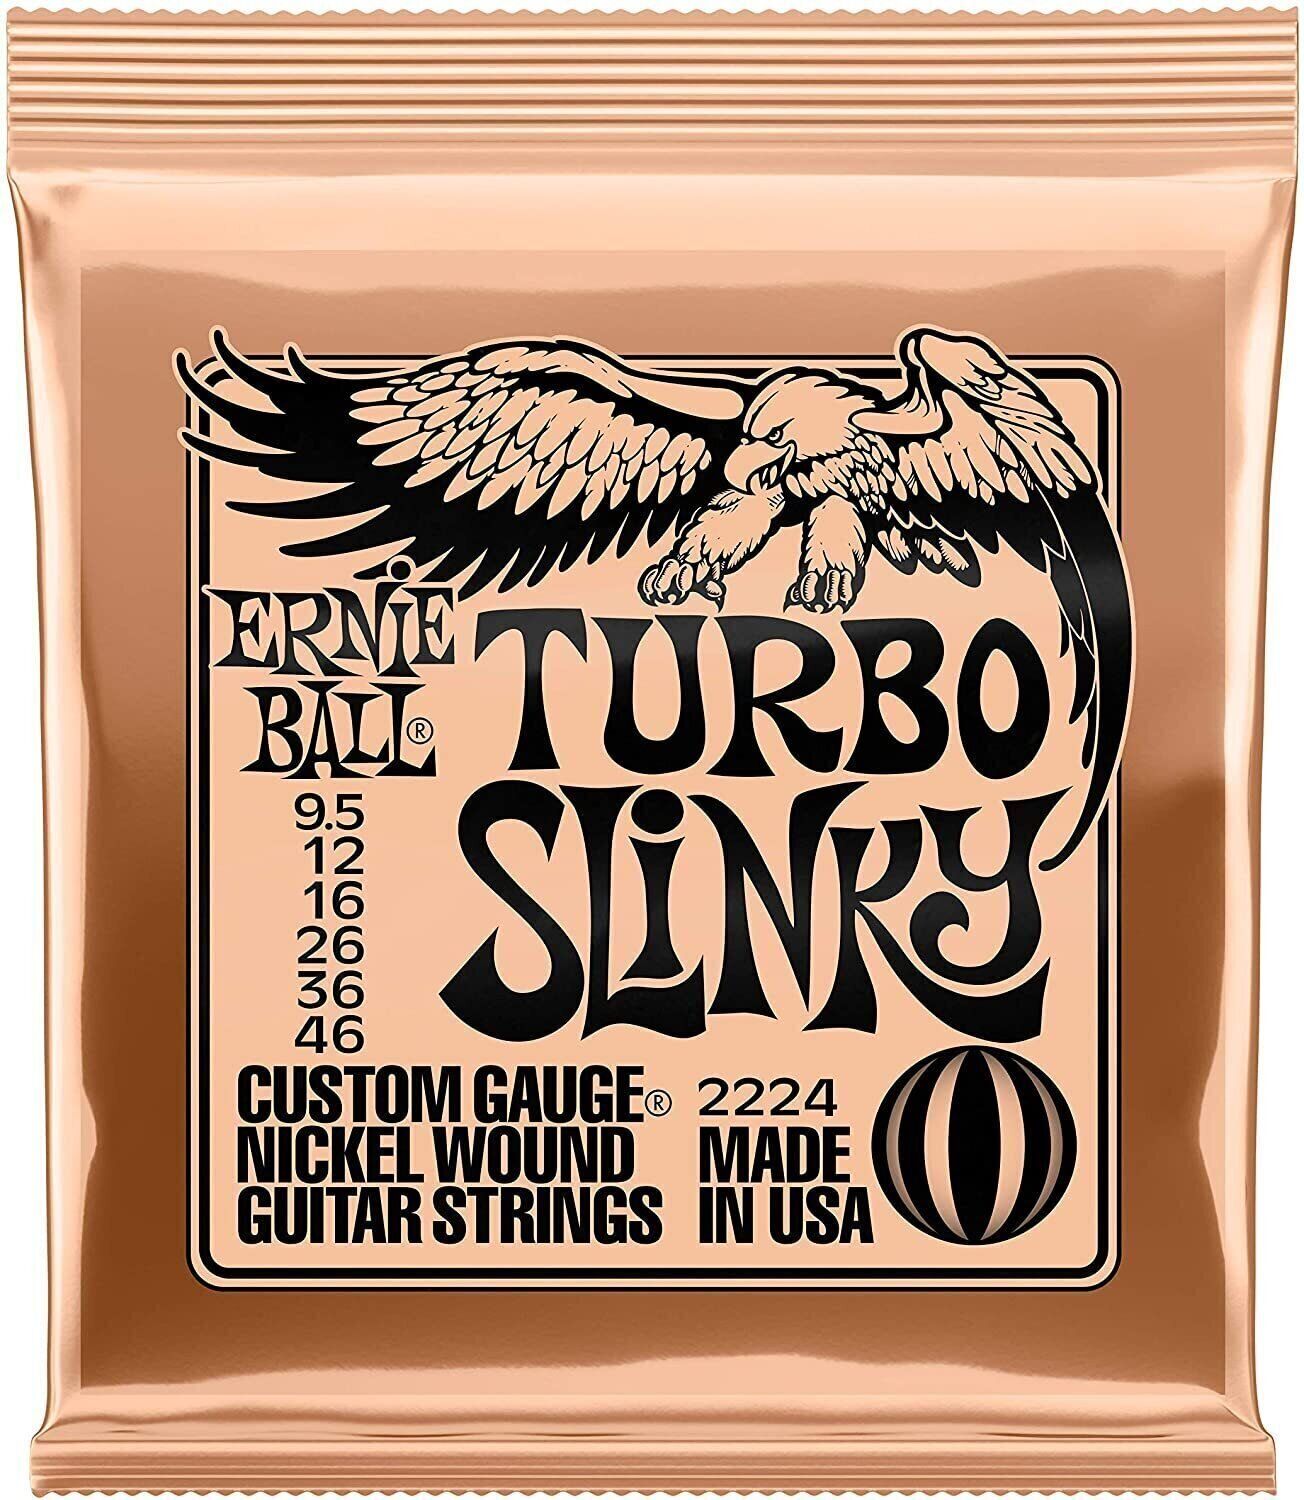 Ernie Ball Turbo Slinky 2224